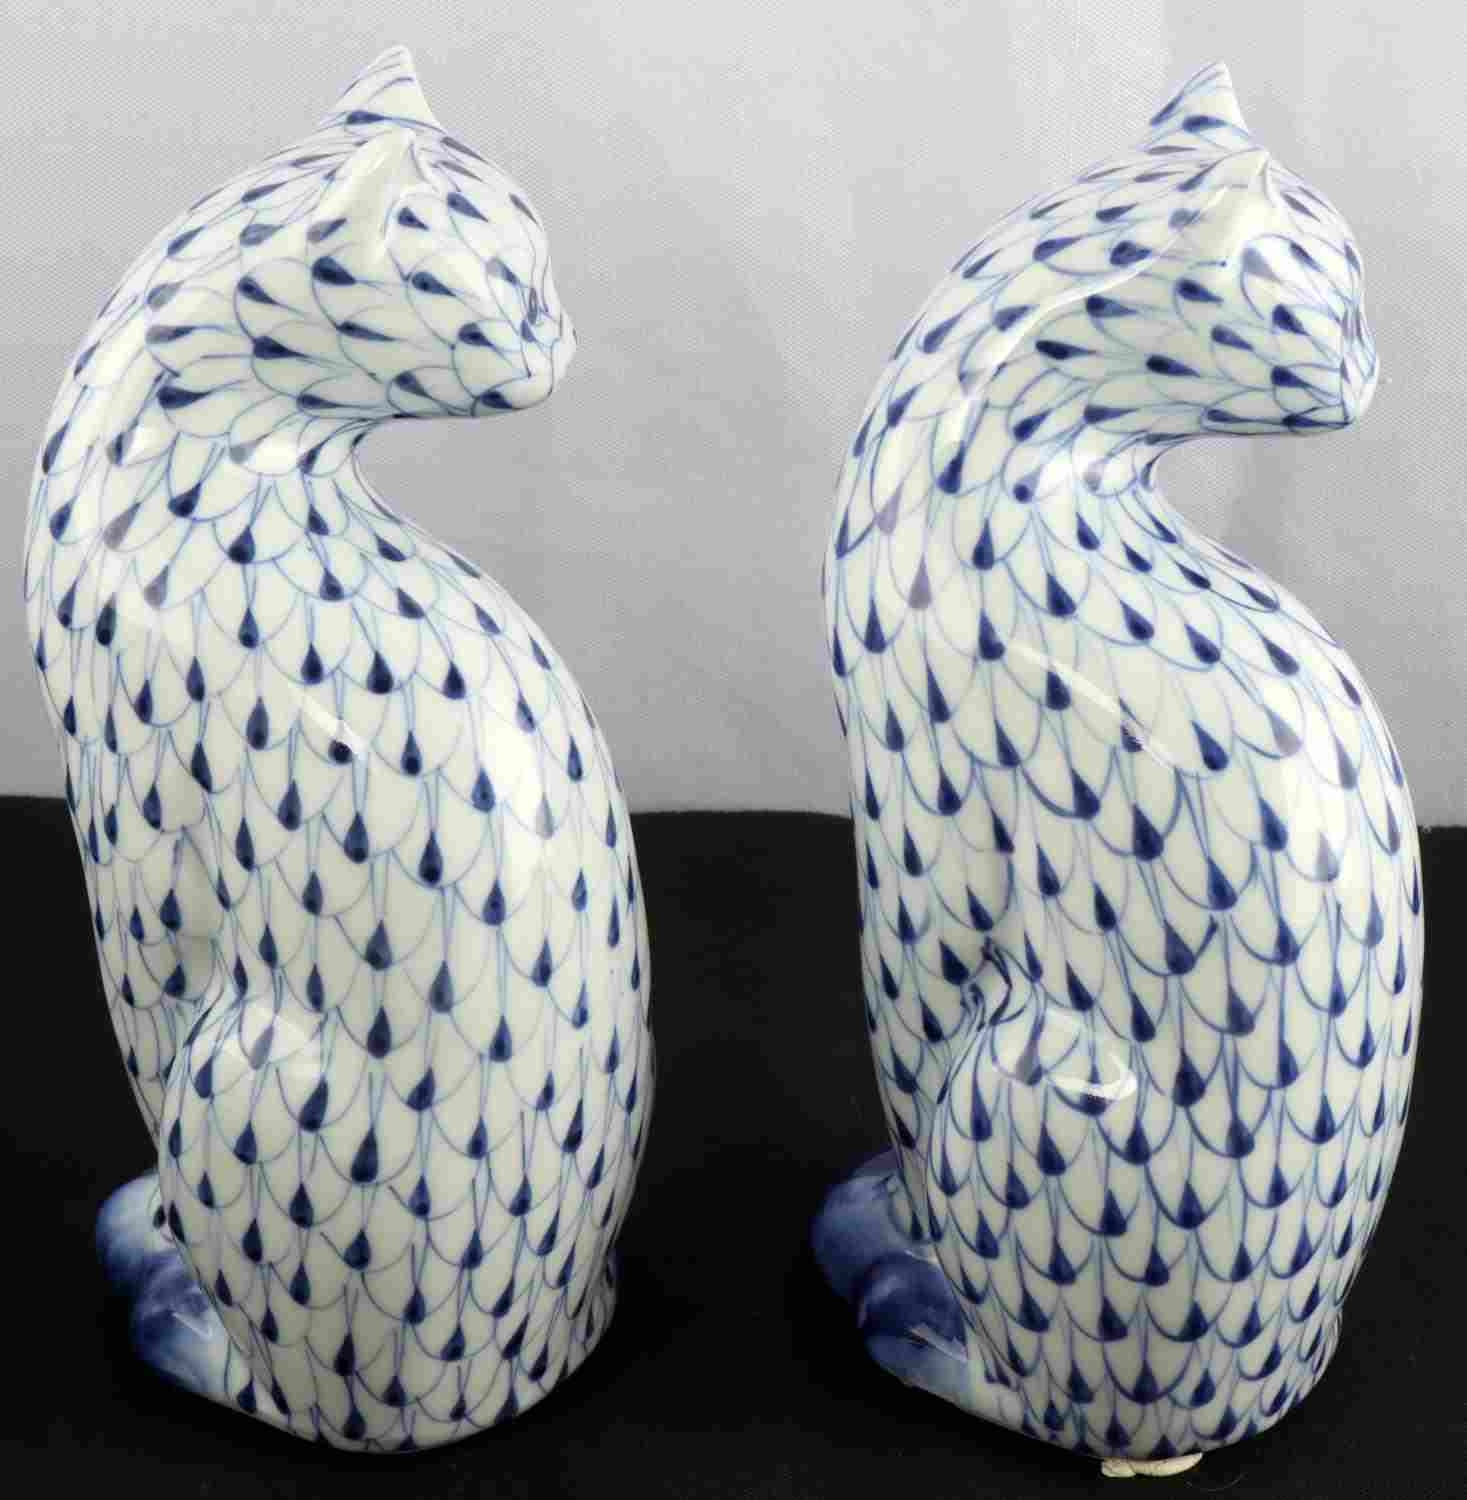 Sold at Auction: Andrea White, Andrea Sadek Porcelain White Heron